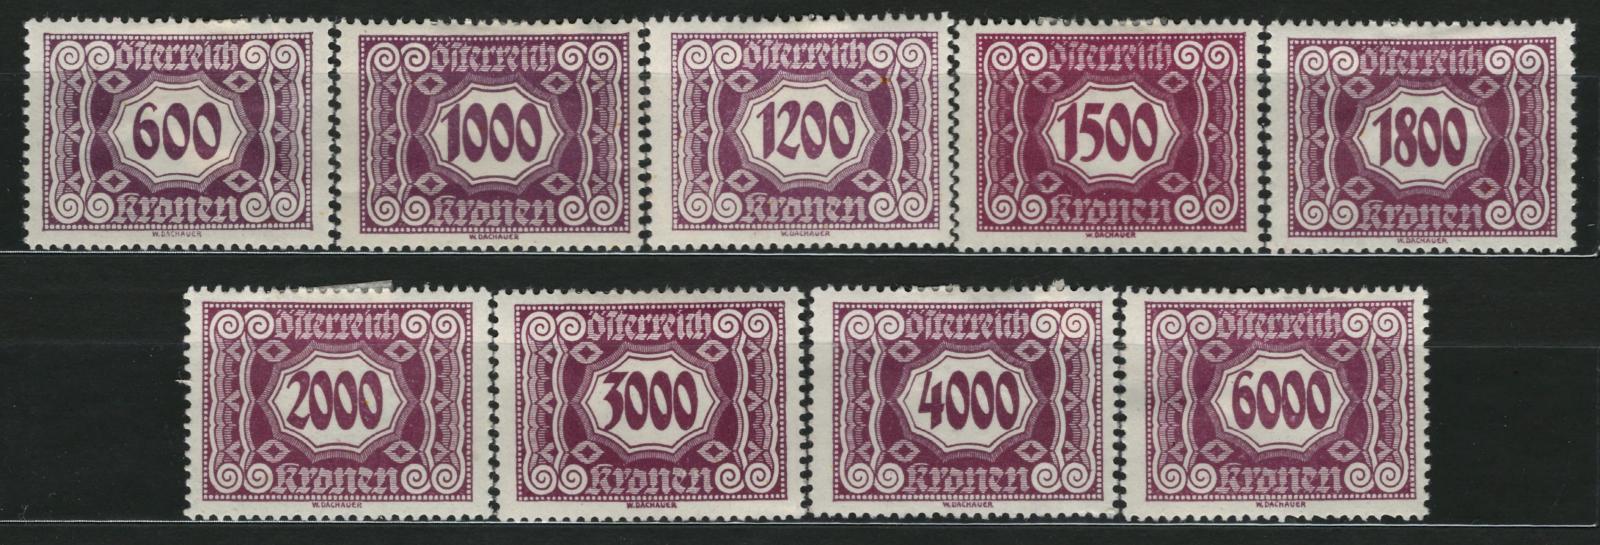 Rakousko / Österreich - PORTOMARKEN 1922 - Mi. P 122 - P 131 * - Známky